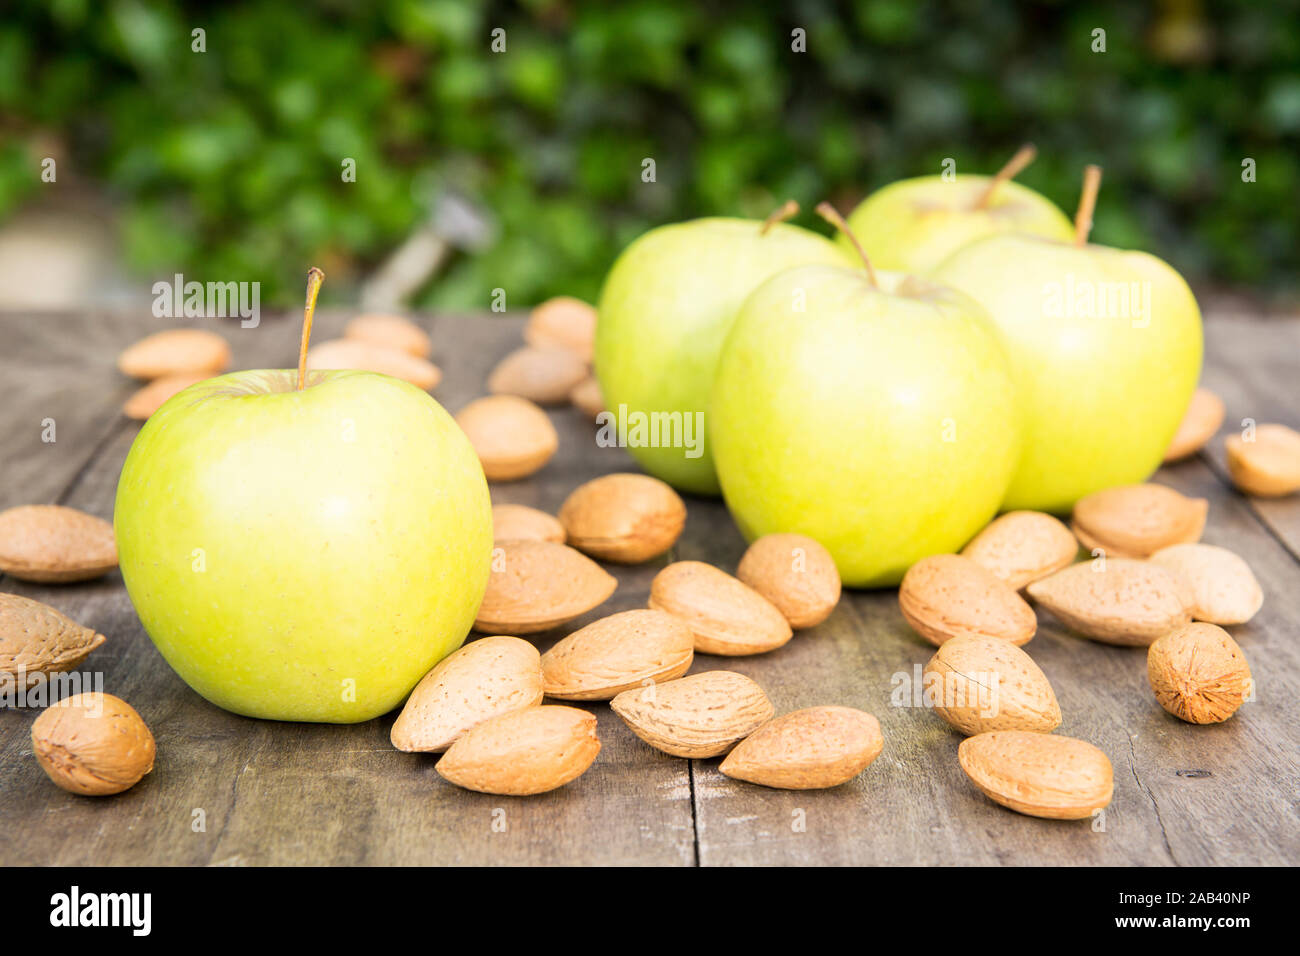 Äpfel und Mandeln liegen im Holztisch zusammen auf einem Garten |pommes et amandes couché ensemble sur une table en bois dans le jardin| Banque D'Images